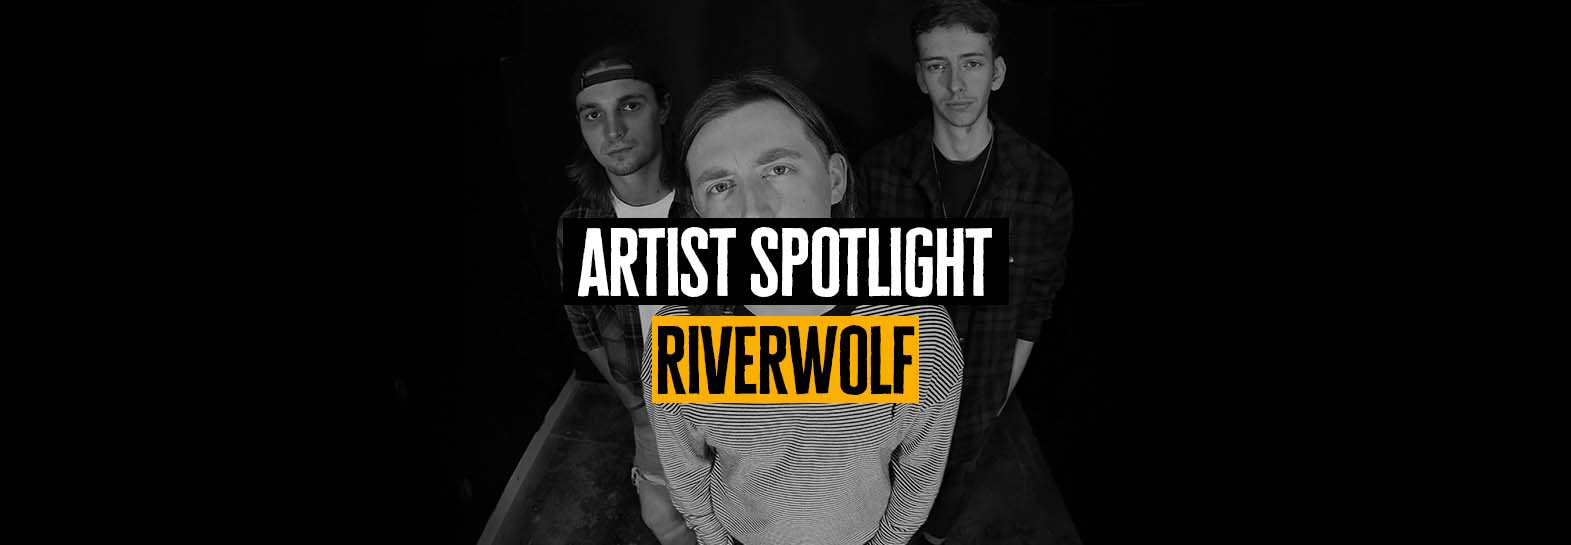 Artists Spotlight Riverwolf Docks Academy in Grimsby